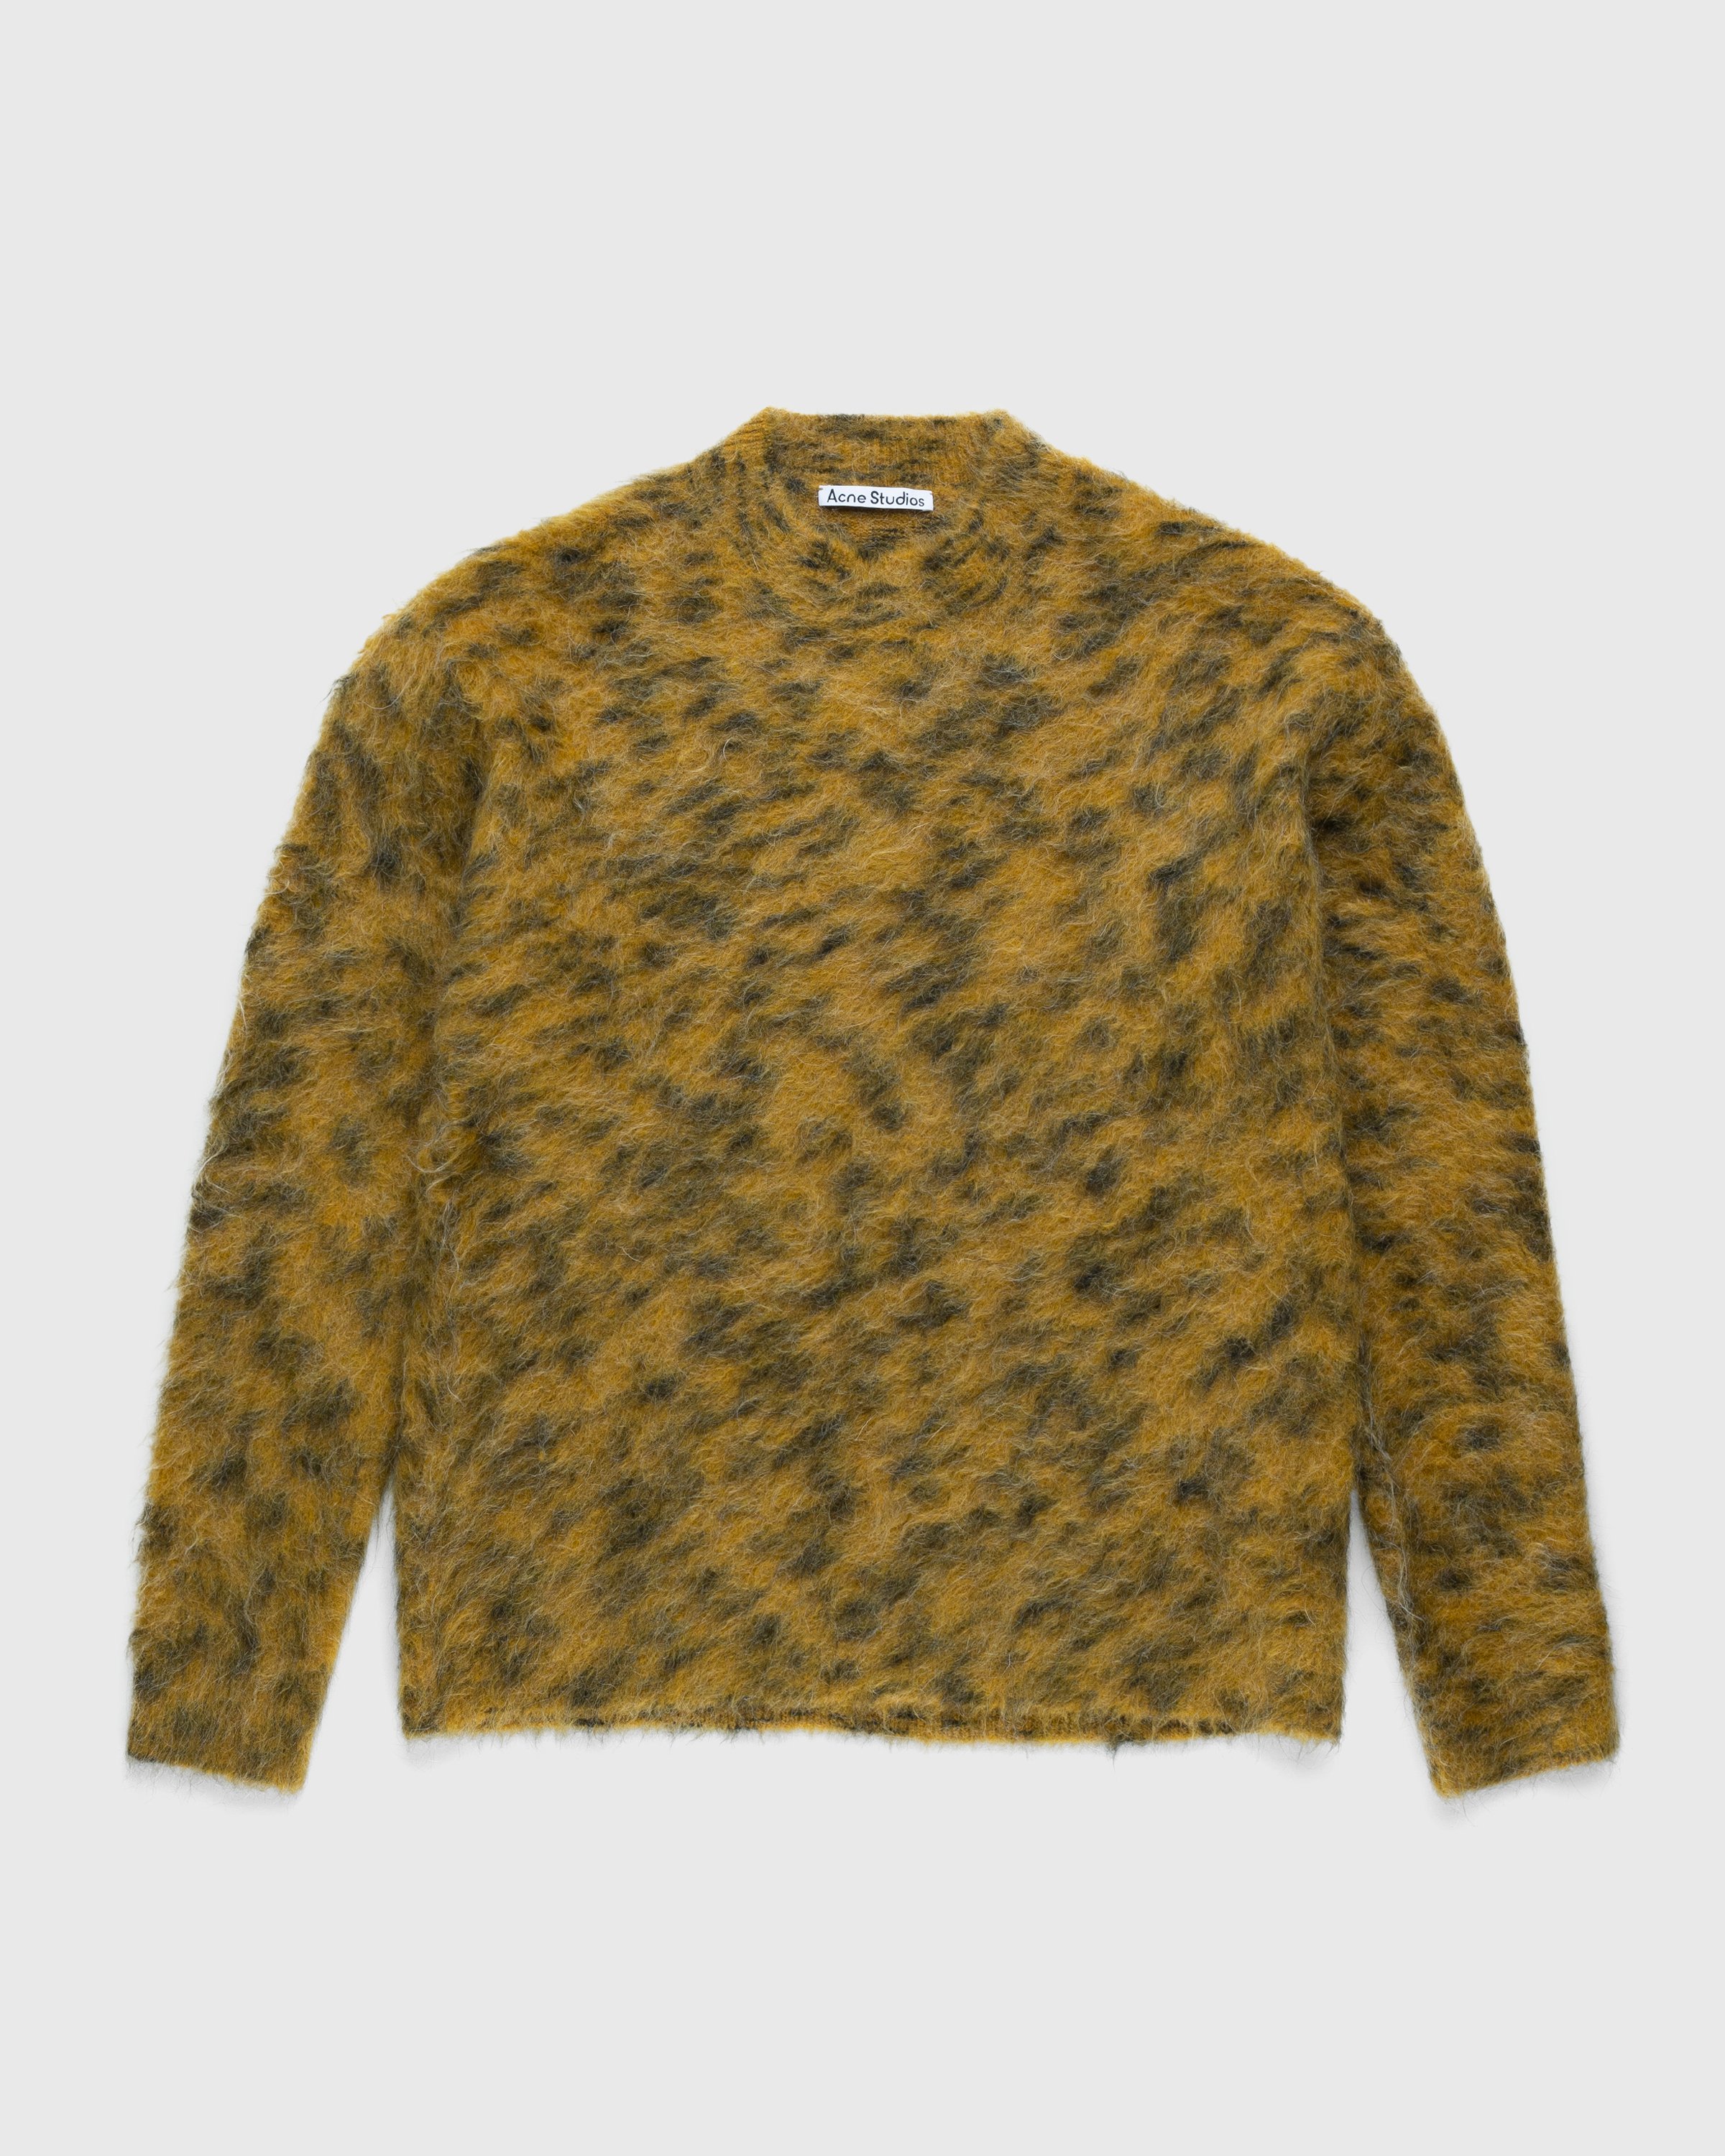 Acne Studios - Hairy Crewneck Sweater Yellow - Clothing - Yellow - Image 1